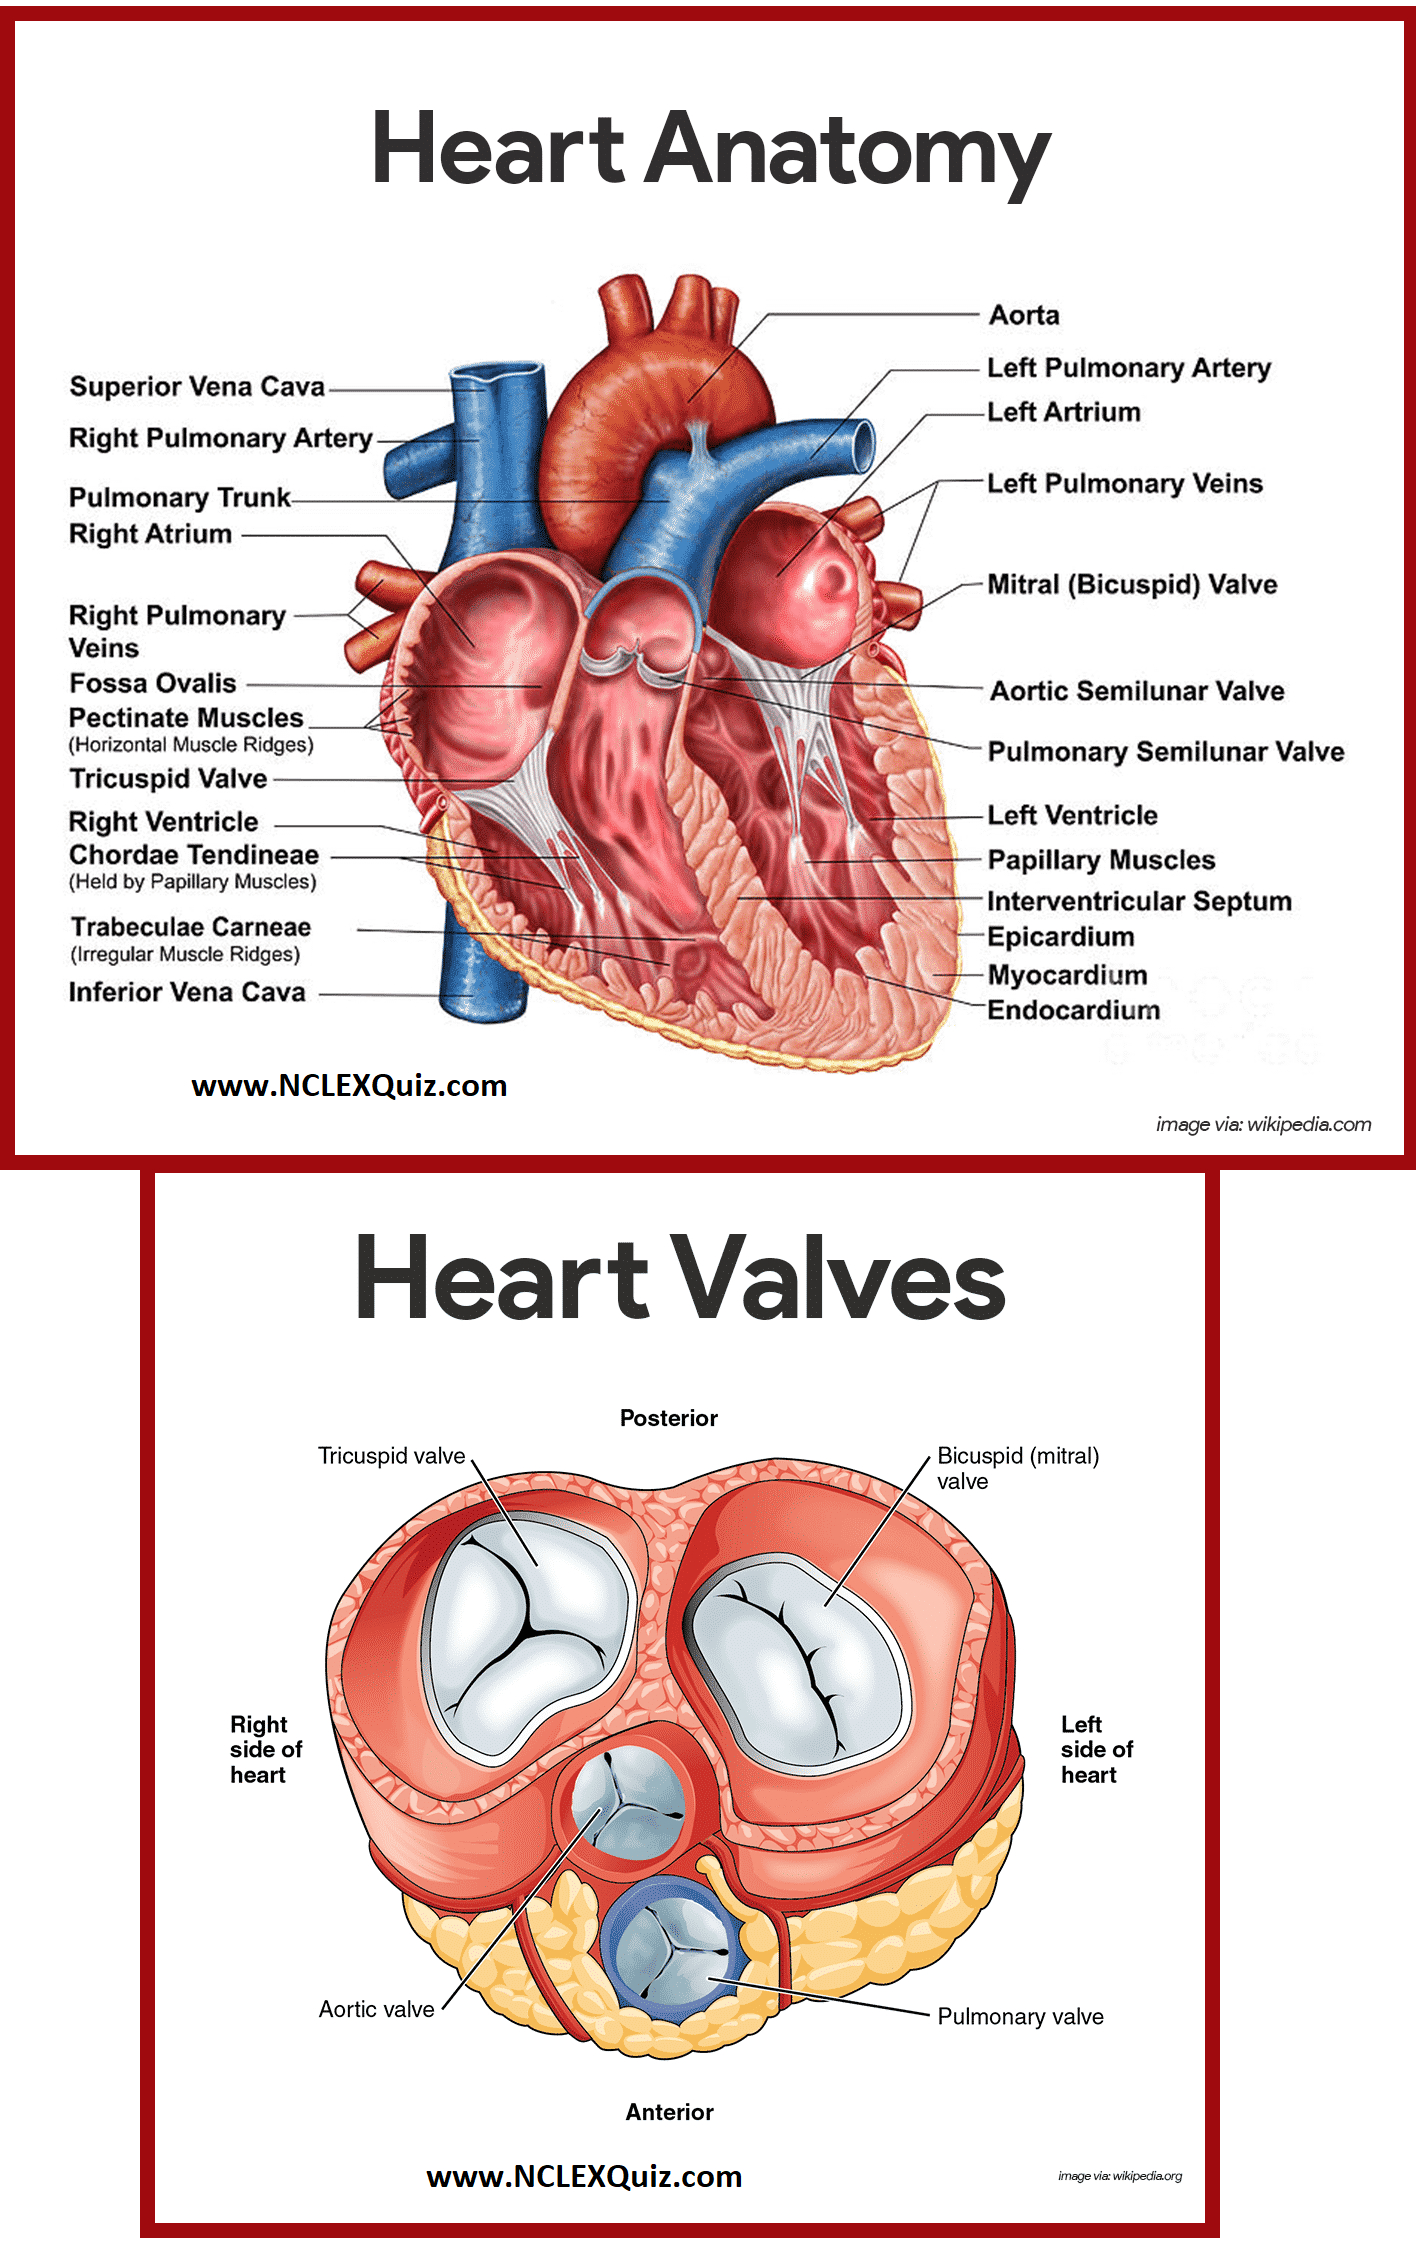 Heart Blood Flow Diagram Diagram Of Heart Blood Flow For Cardiac Nursing Students Nclex Quiz